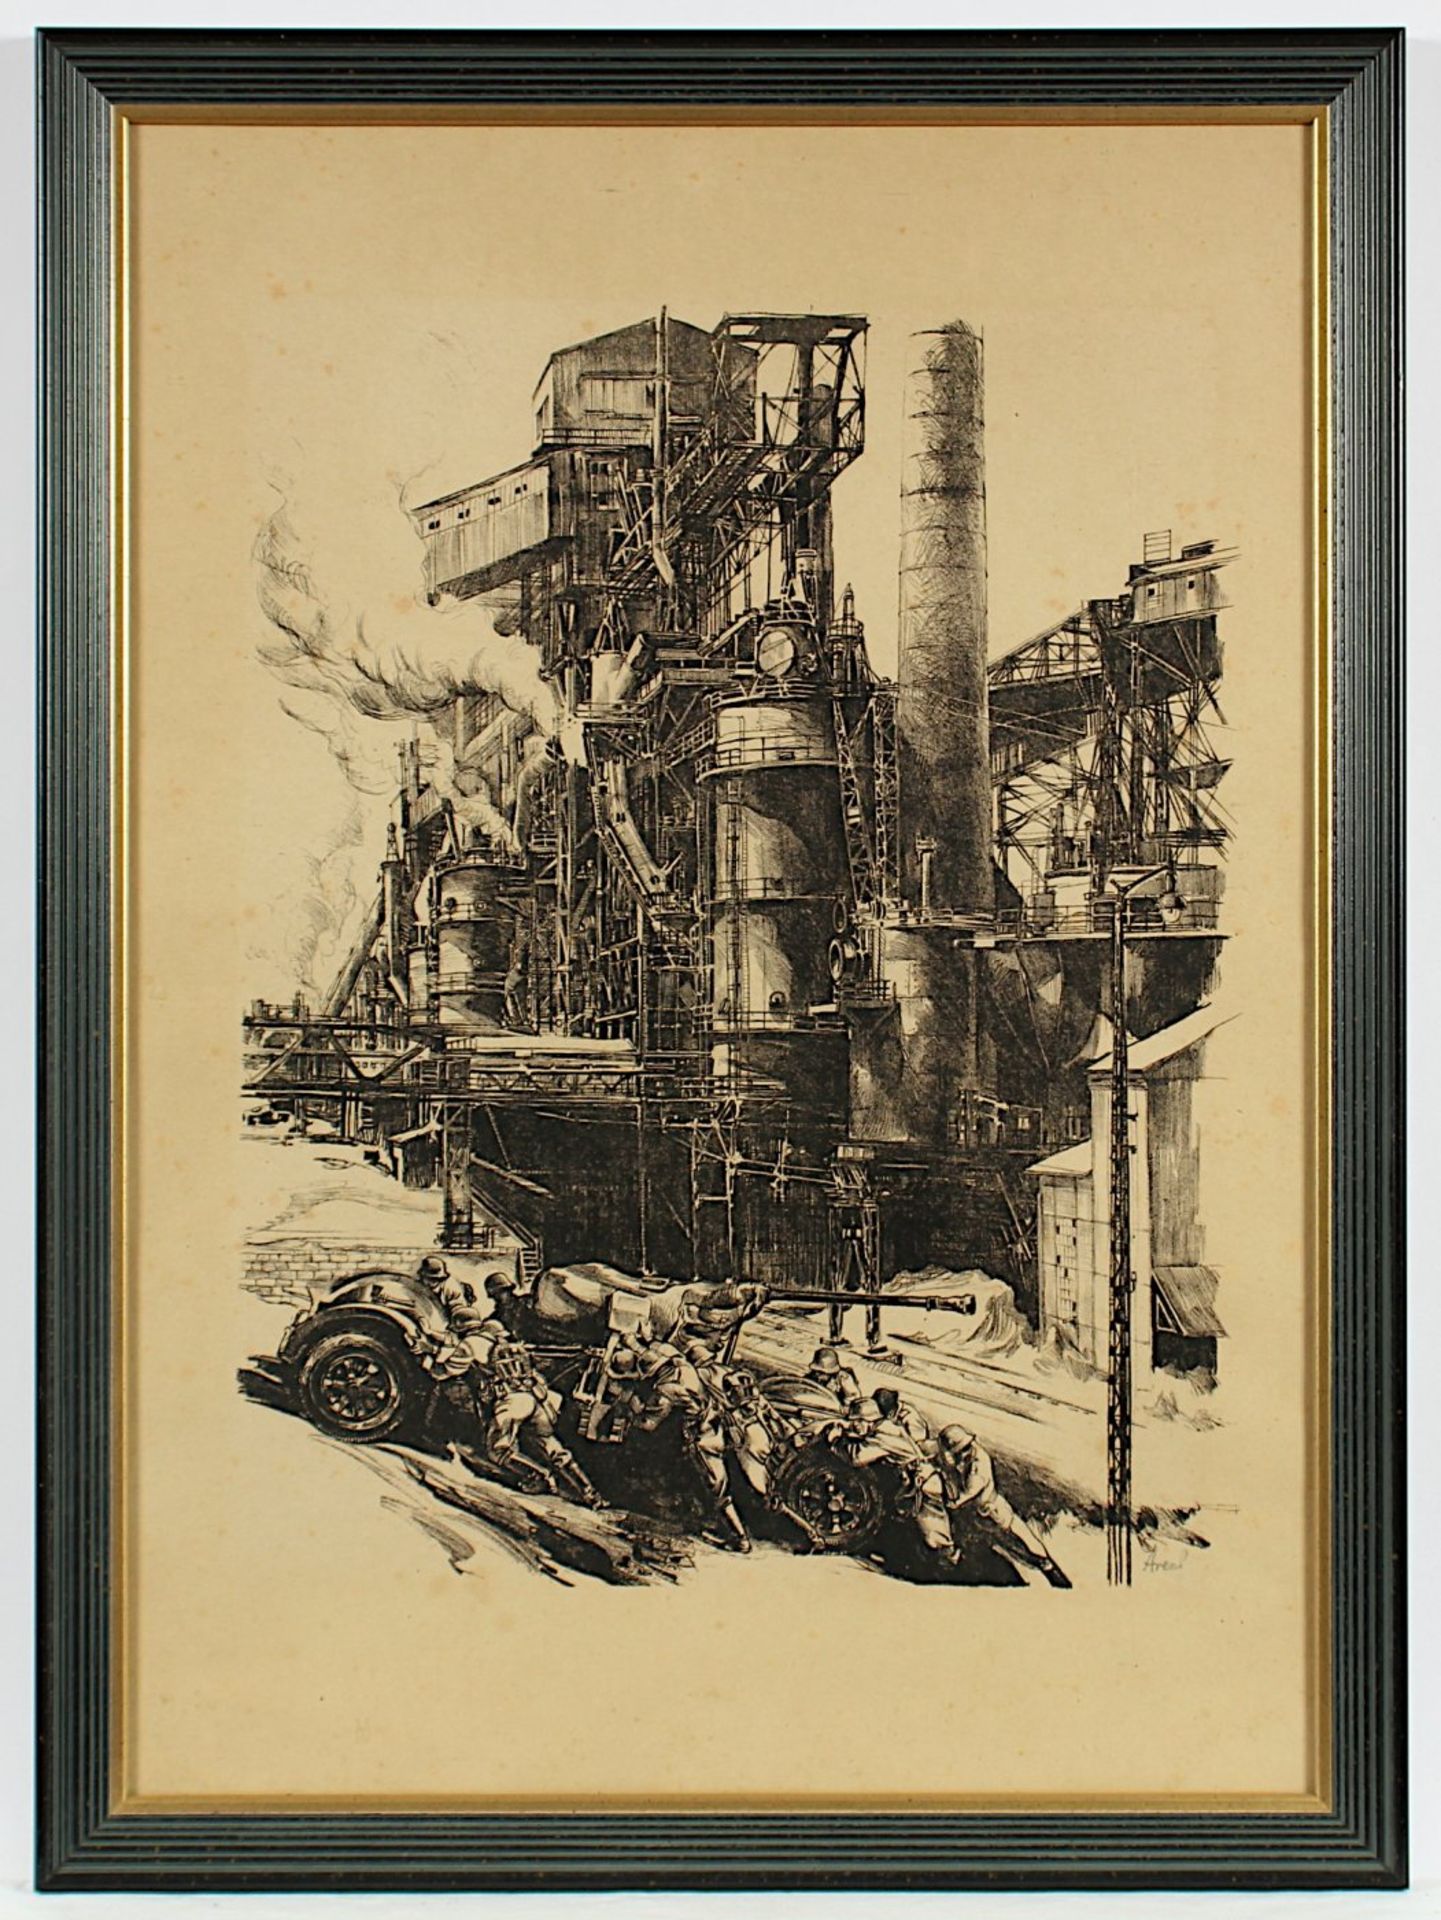 ARENS, Albert (1881-ca.1953), "Krupp-Hüttenwerk mit Flak", Lithografie, 52 x 41, handsigniert, R.